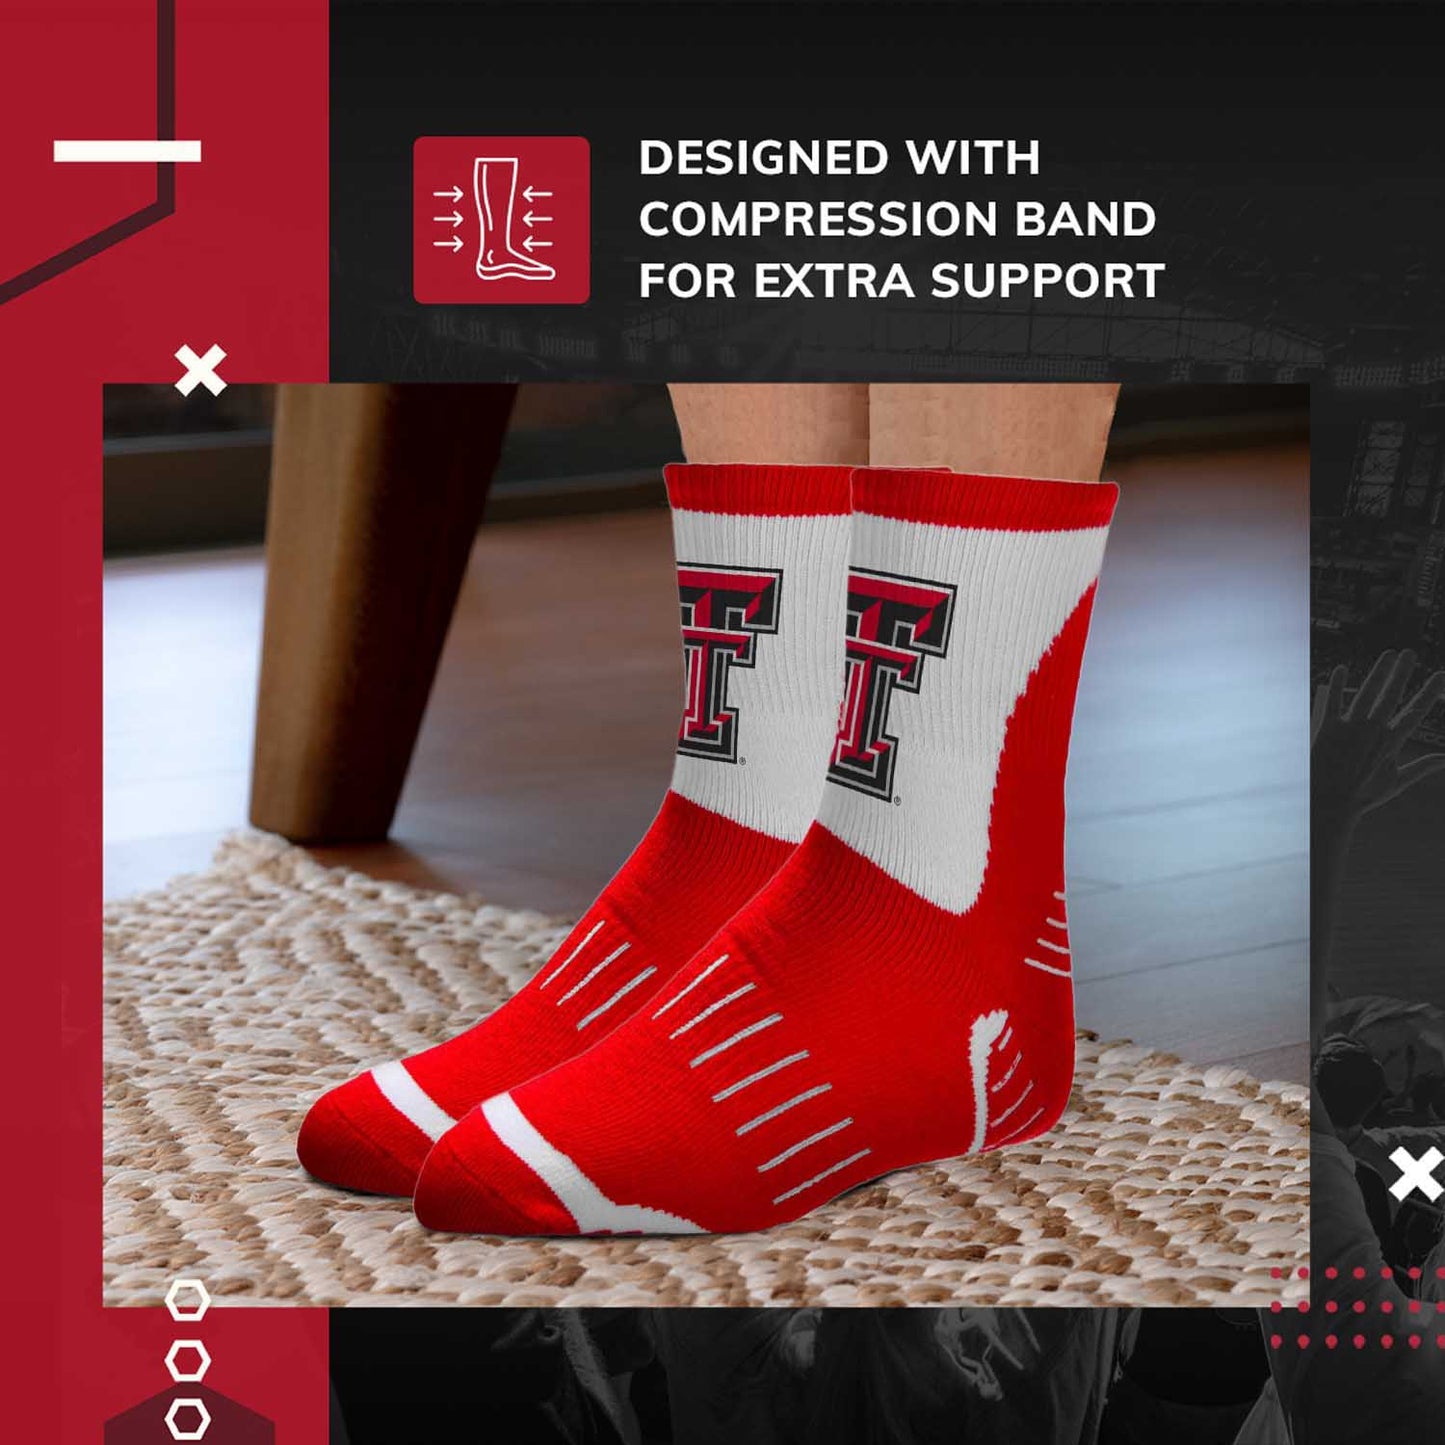 Texas Tech Red Raiders Adult NCAA Surge Quarter Length Crew Socks - Red